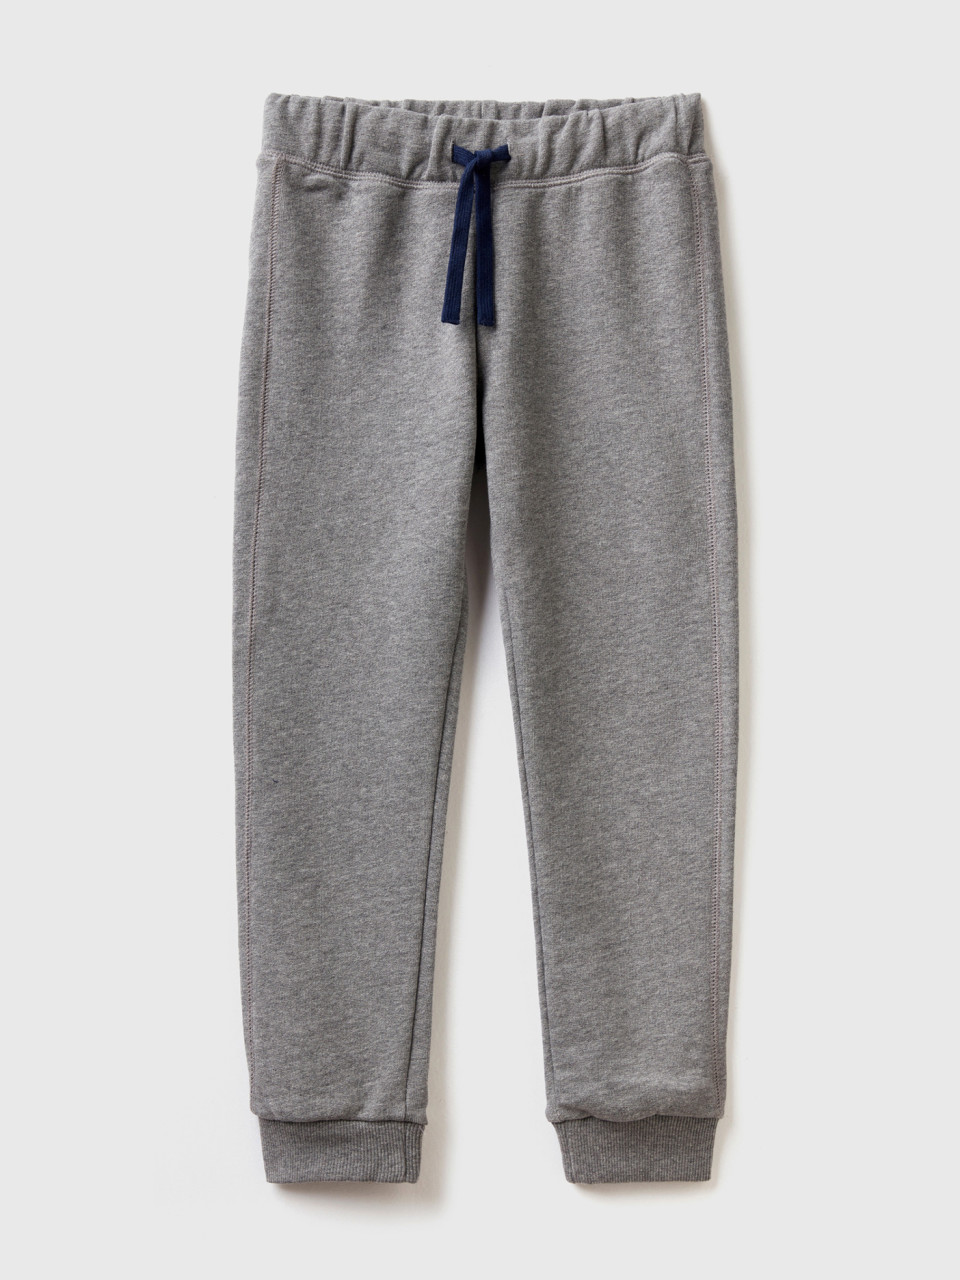 Benetton, 100% Cotton Sweatpants, Dark Gray, Kids